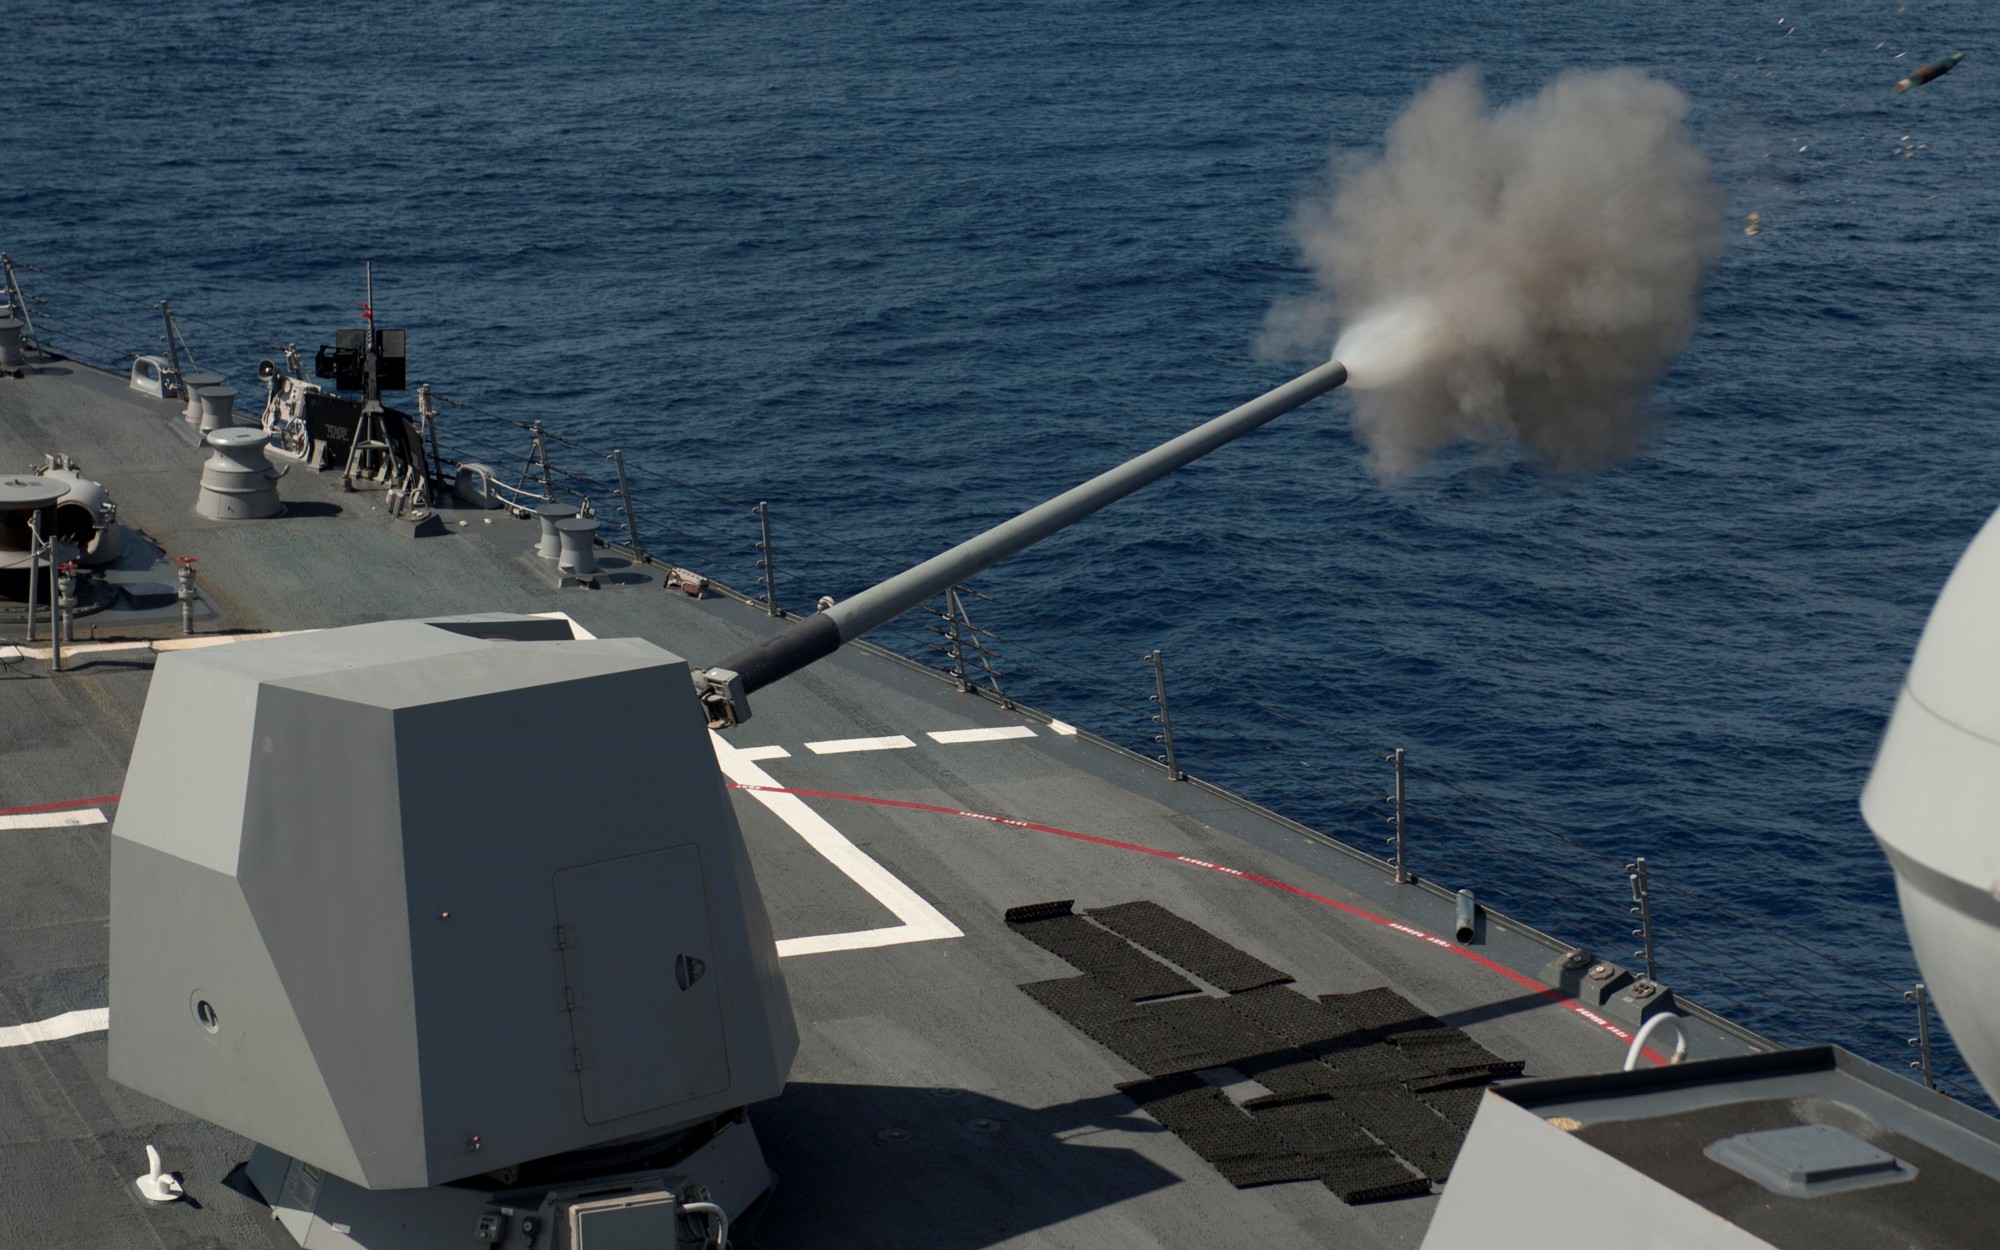 ddg-109 uss jason dunham arleigh burke class guided missile destroyer aegis us navy mk.45 gun fire 66p